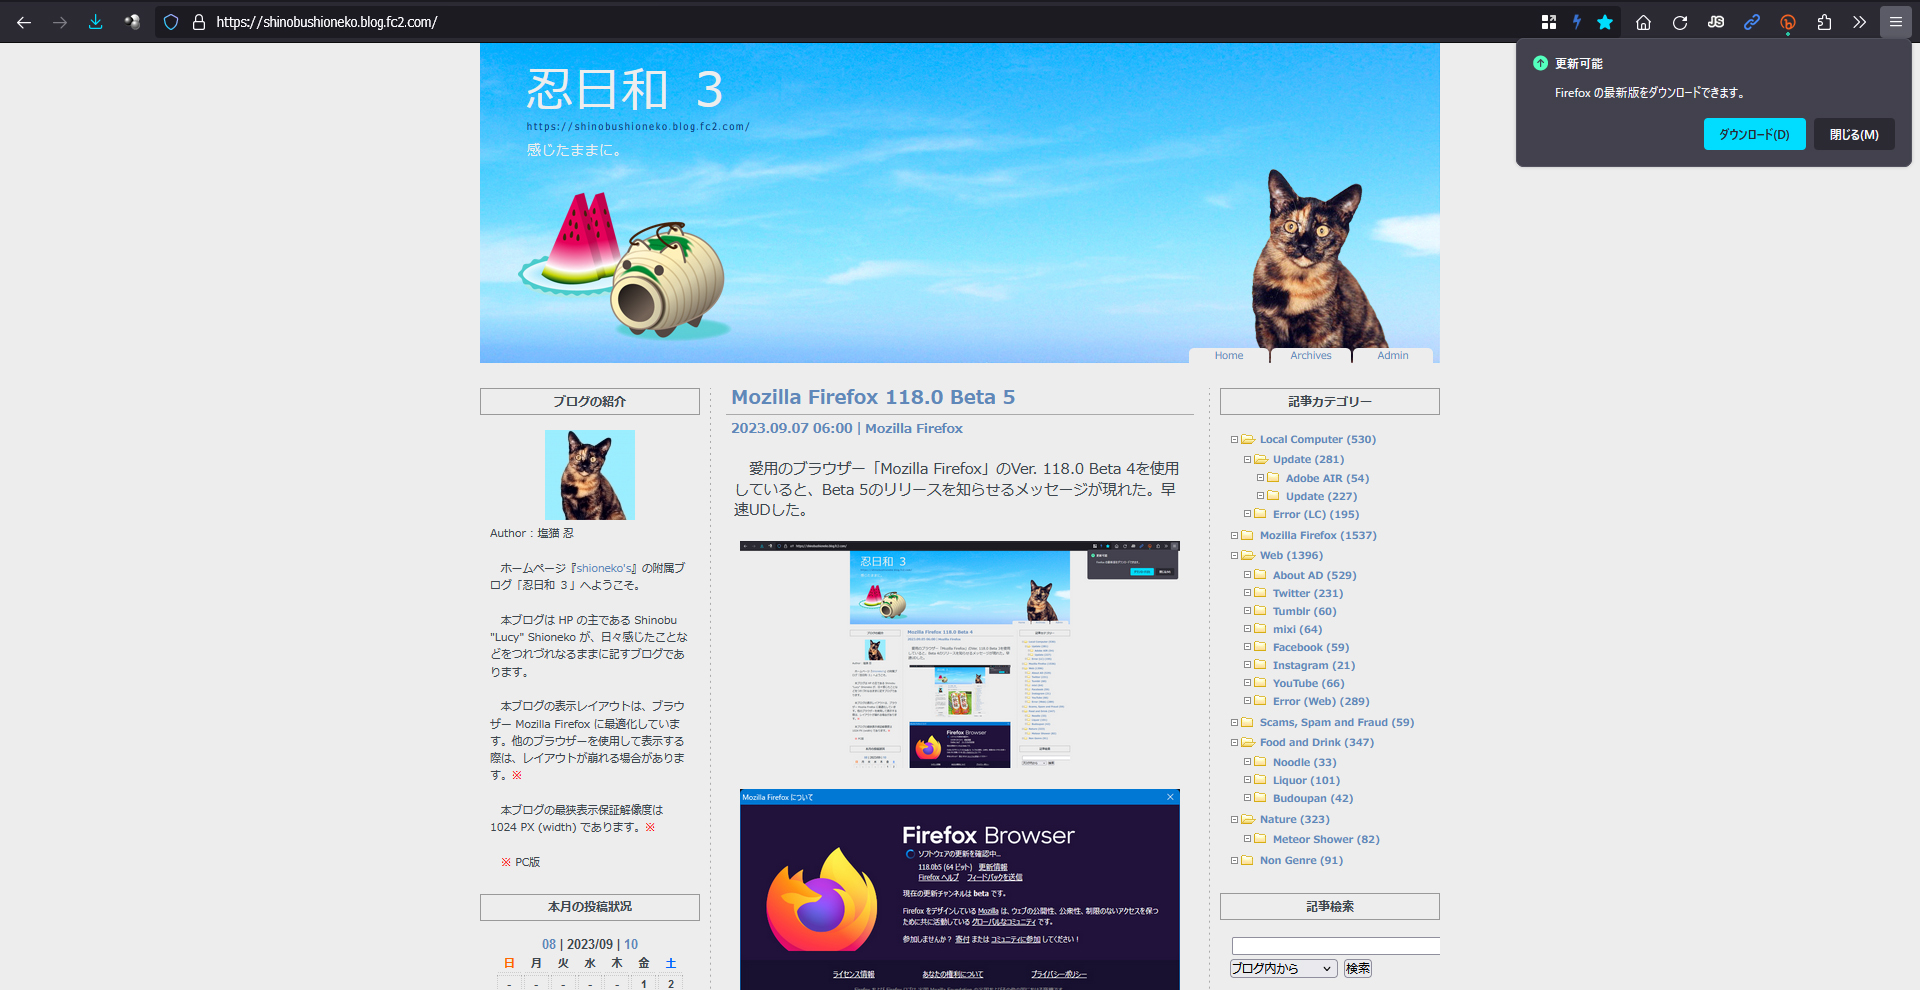 Mozilla Firefox 118.0 Beta 6